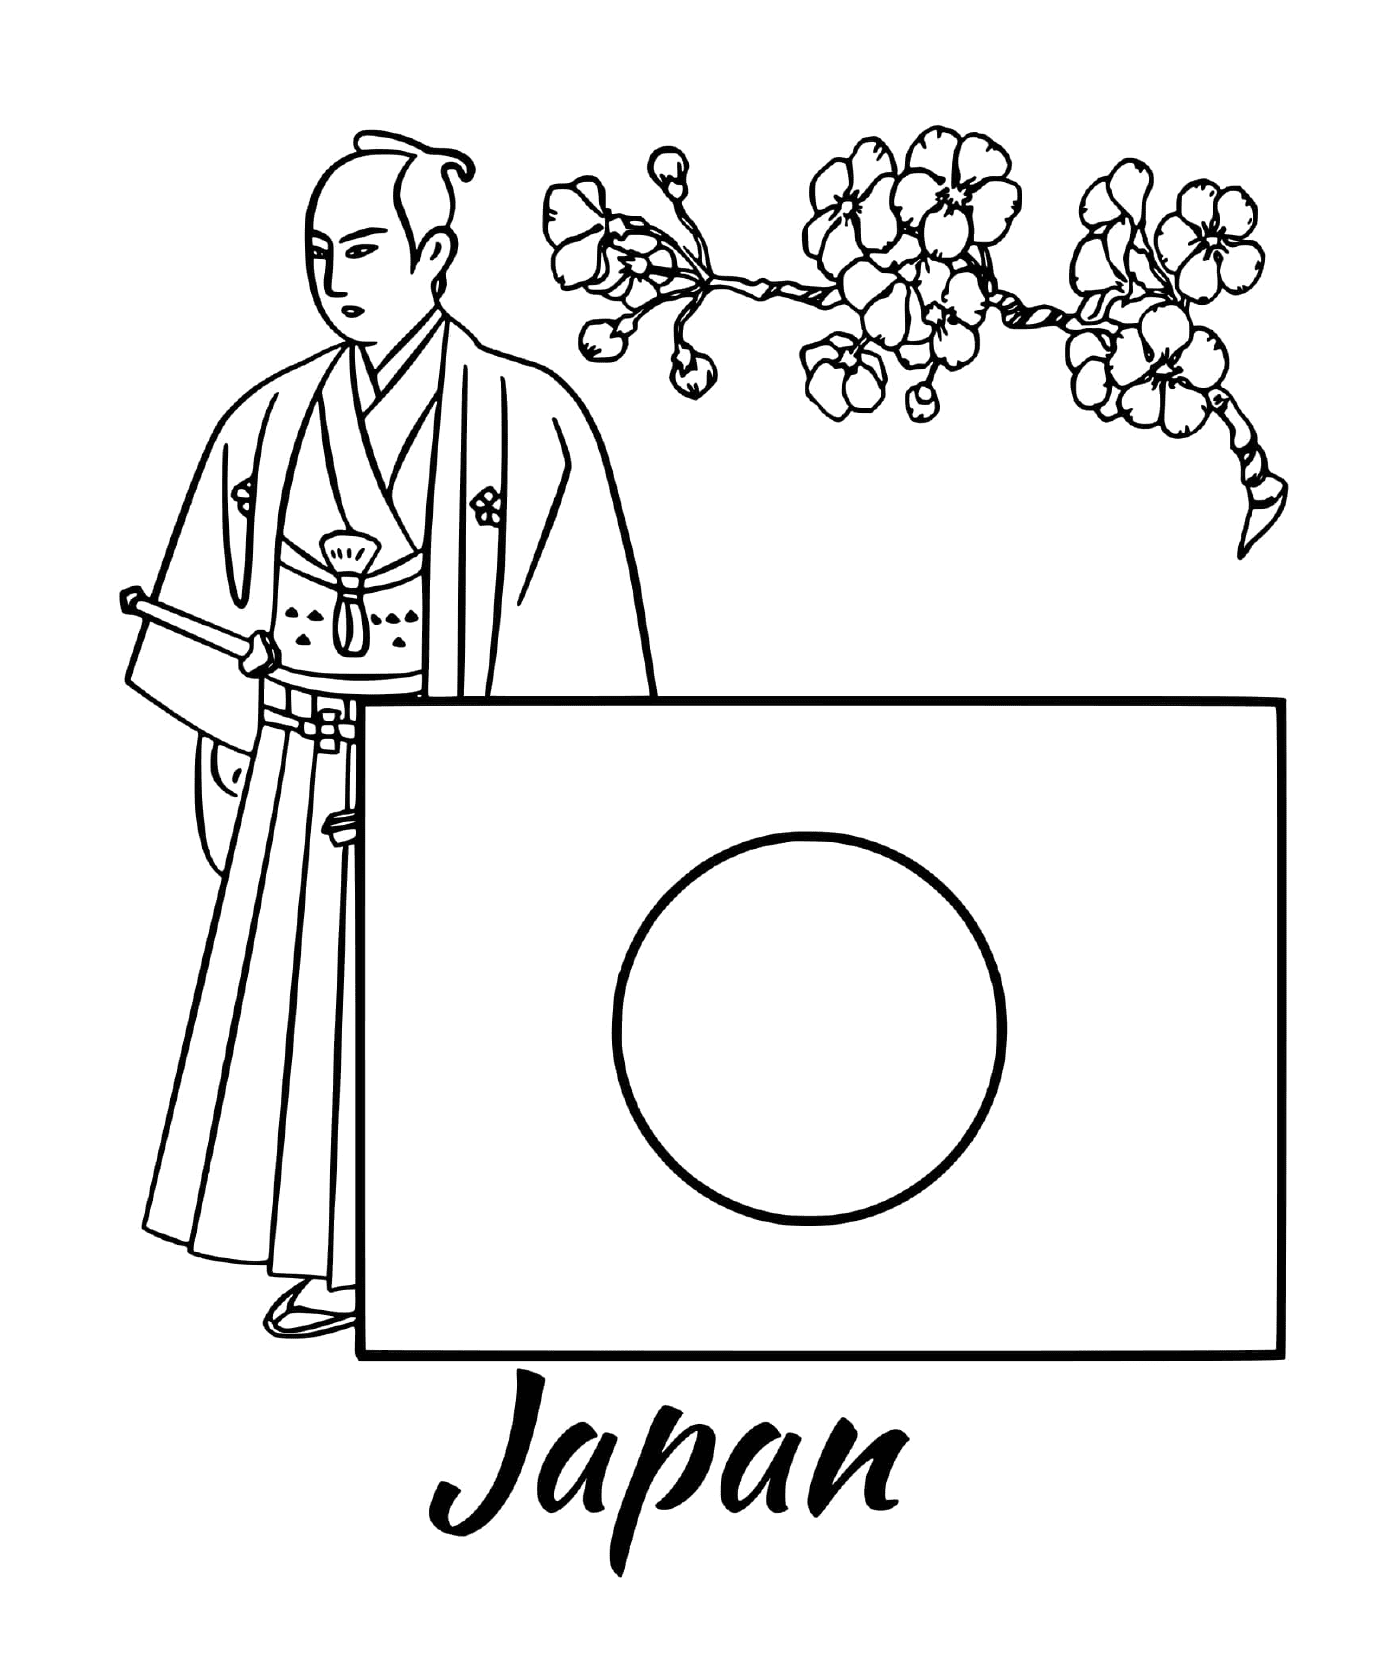  Flag of Japan with a samurai 